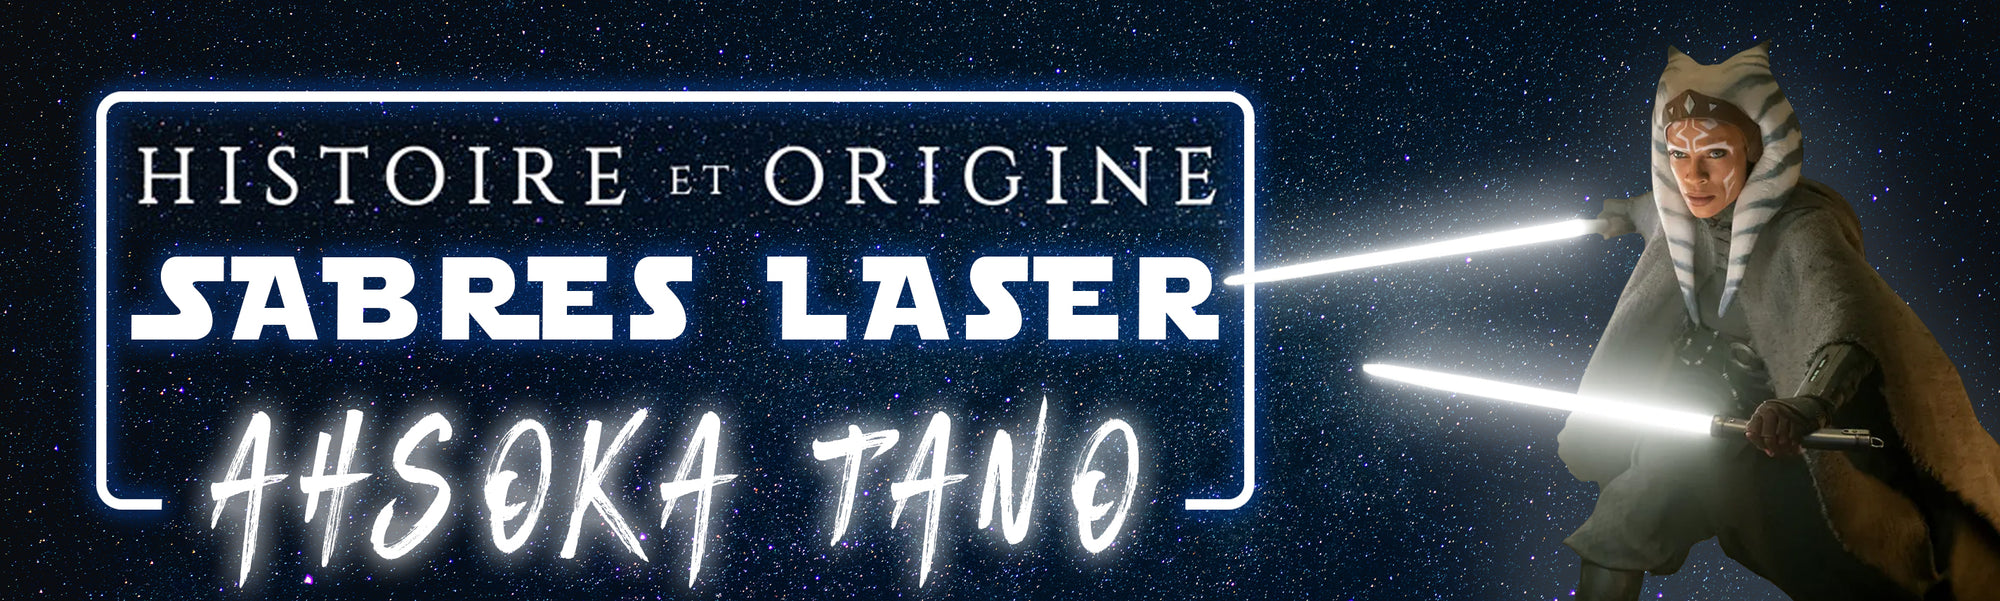 Sabres Laser Blancs d'Ahsoka Tano